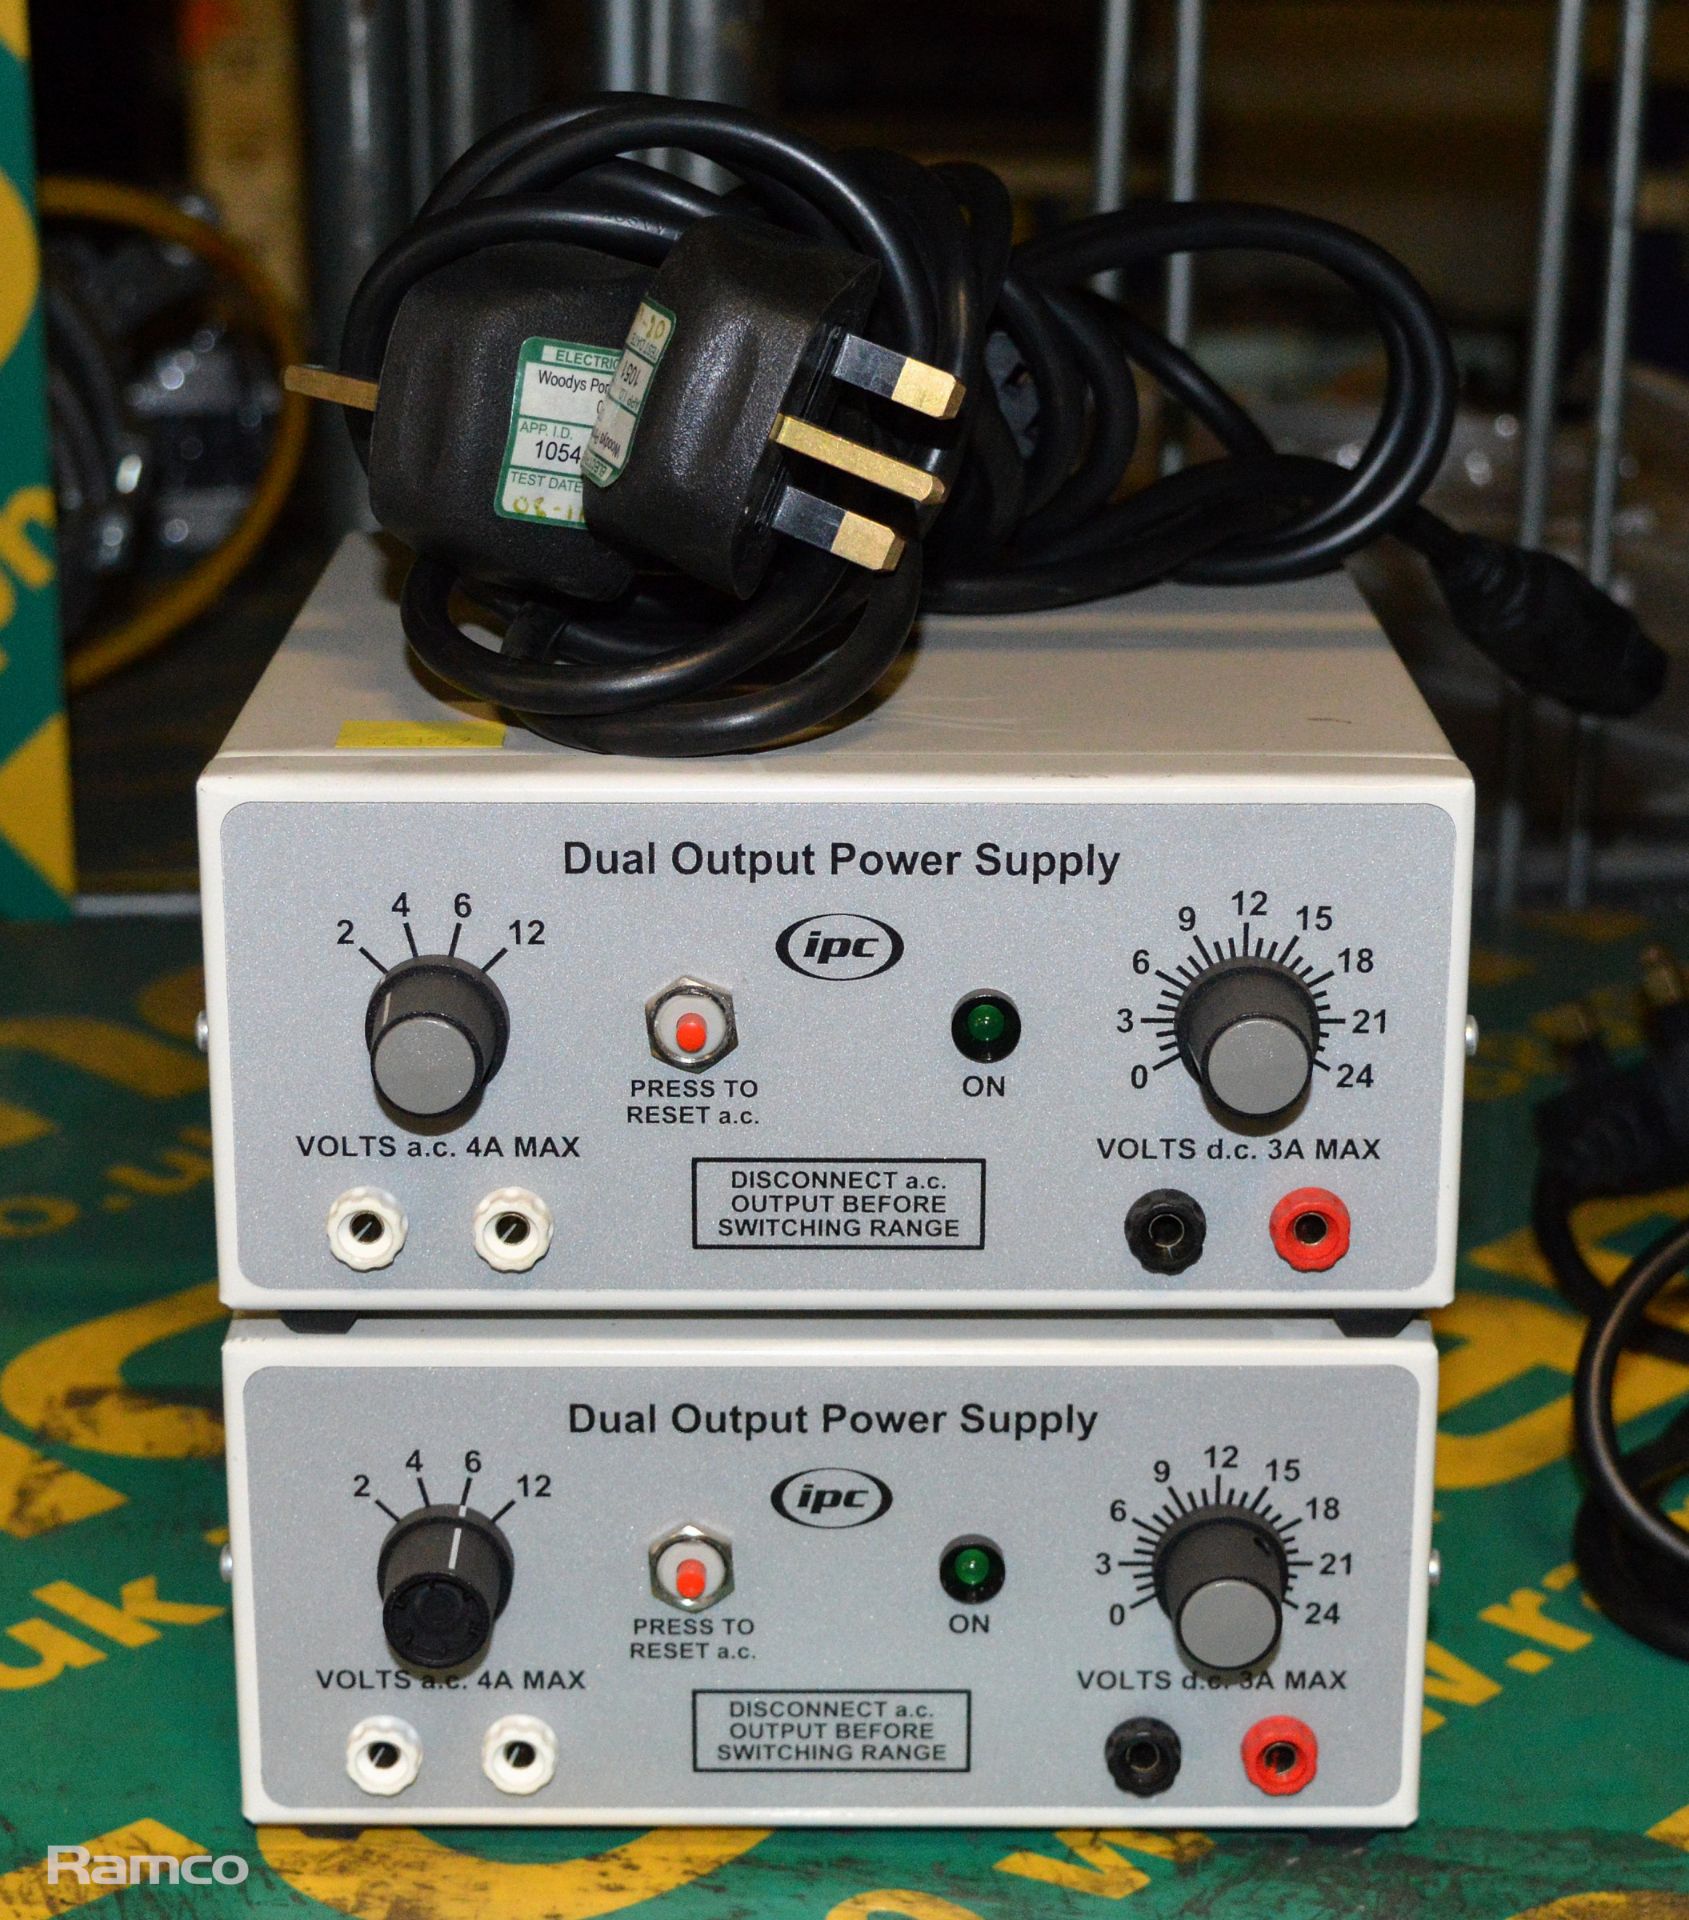 2x IPC - 0978-P Dual Output Power Supply Units